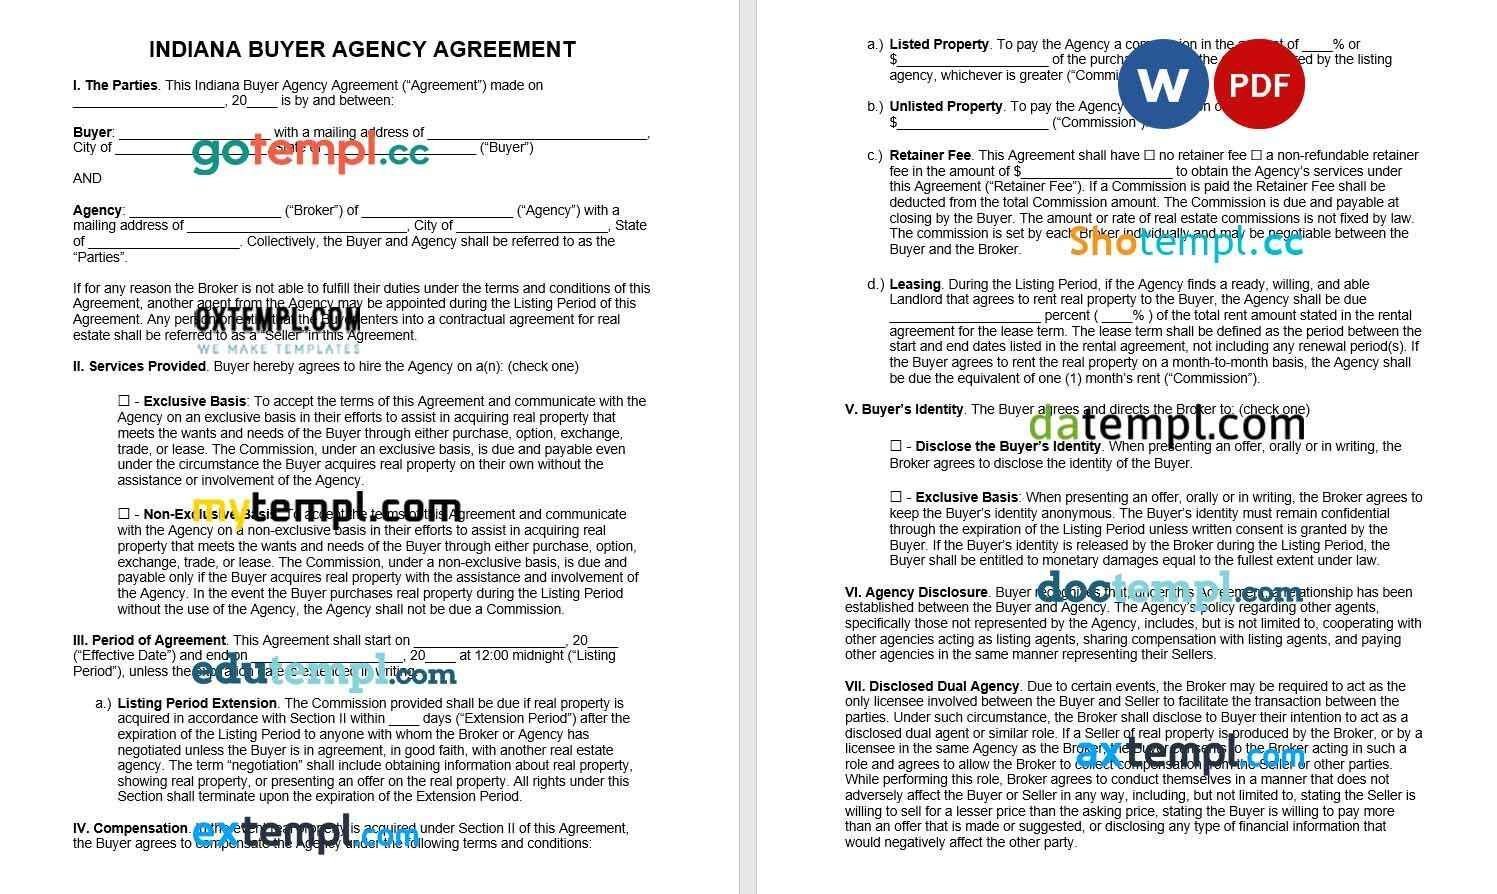 Indiana Buyer Agency Agreement Word example, completely editable